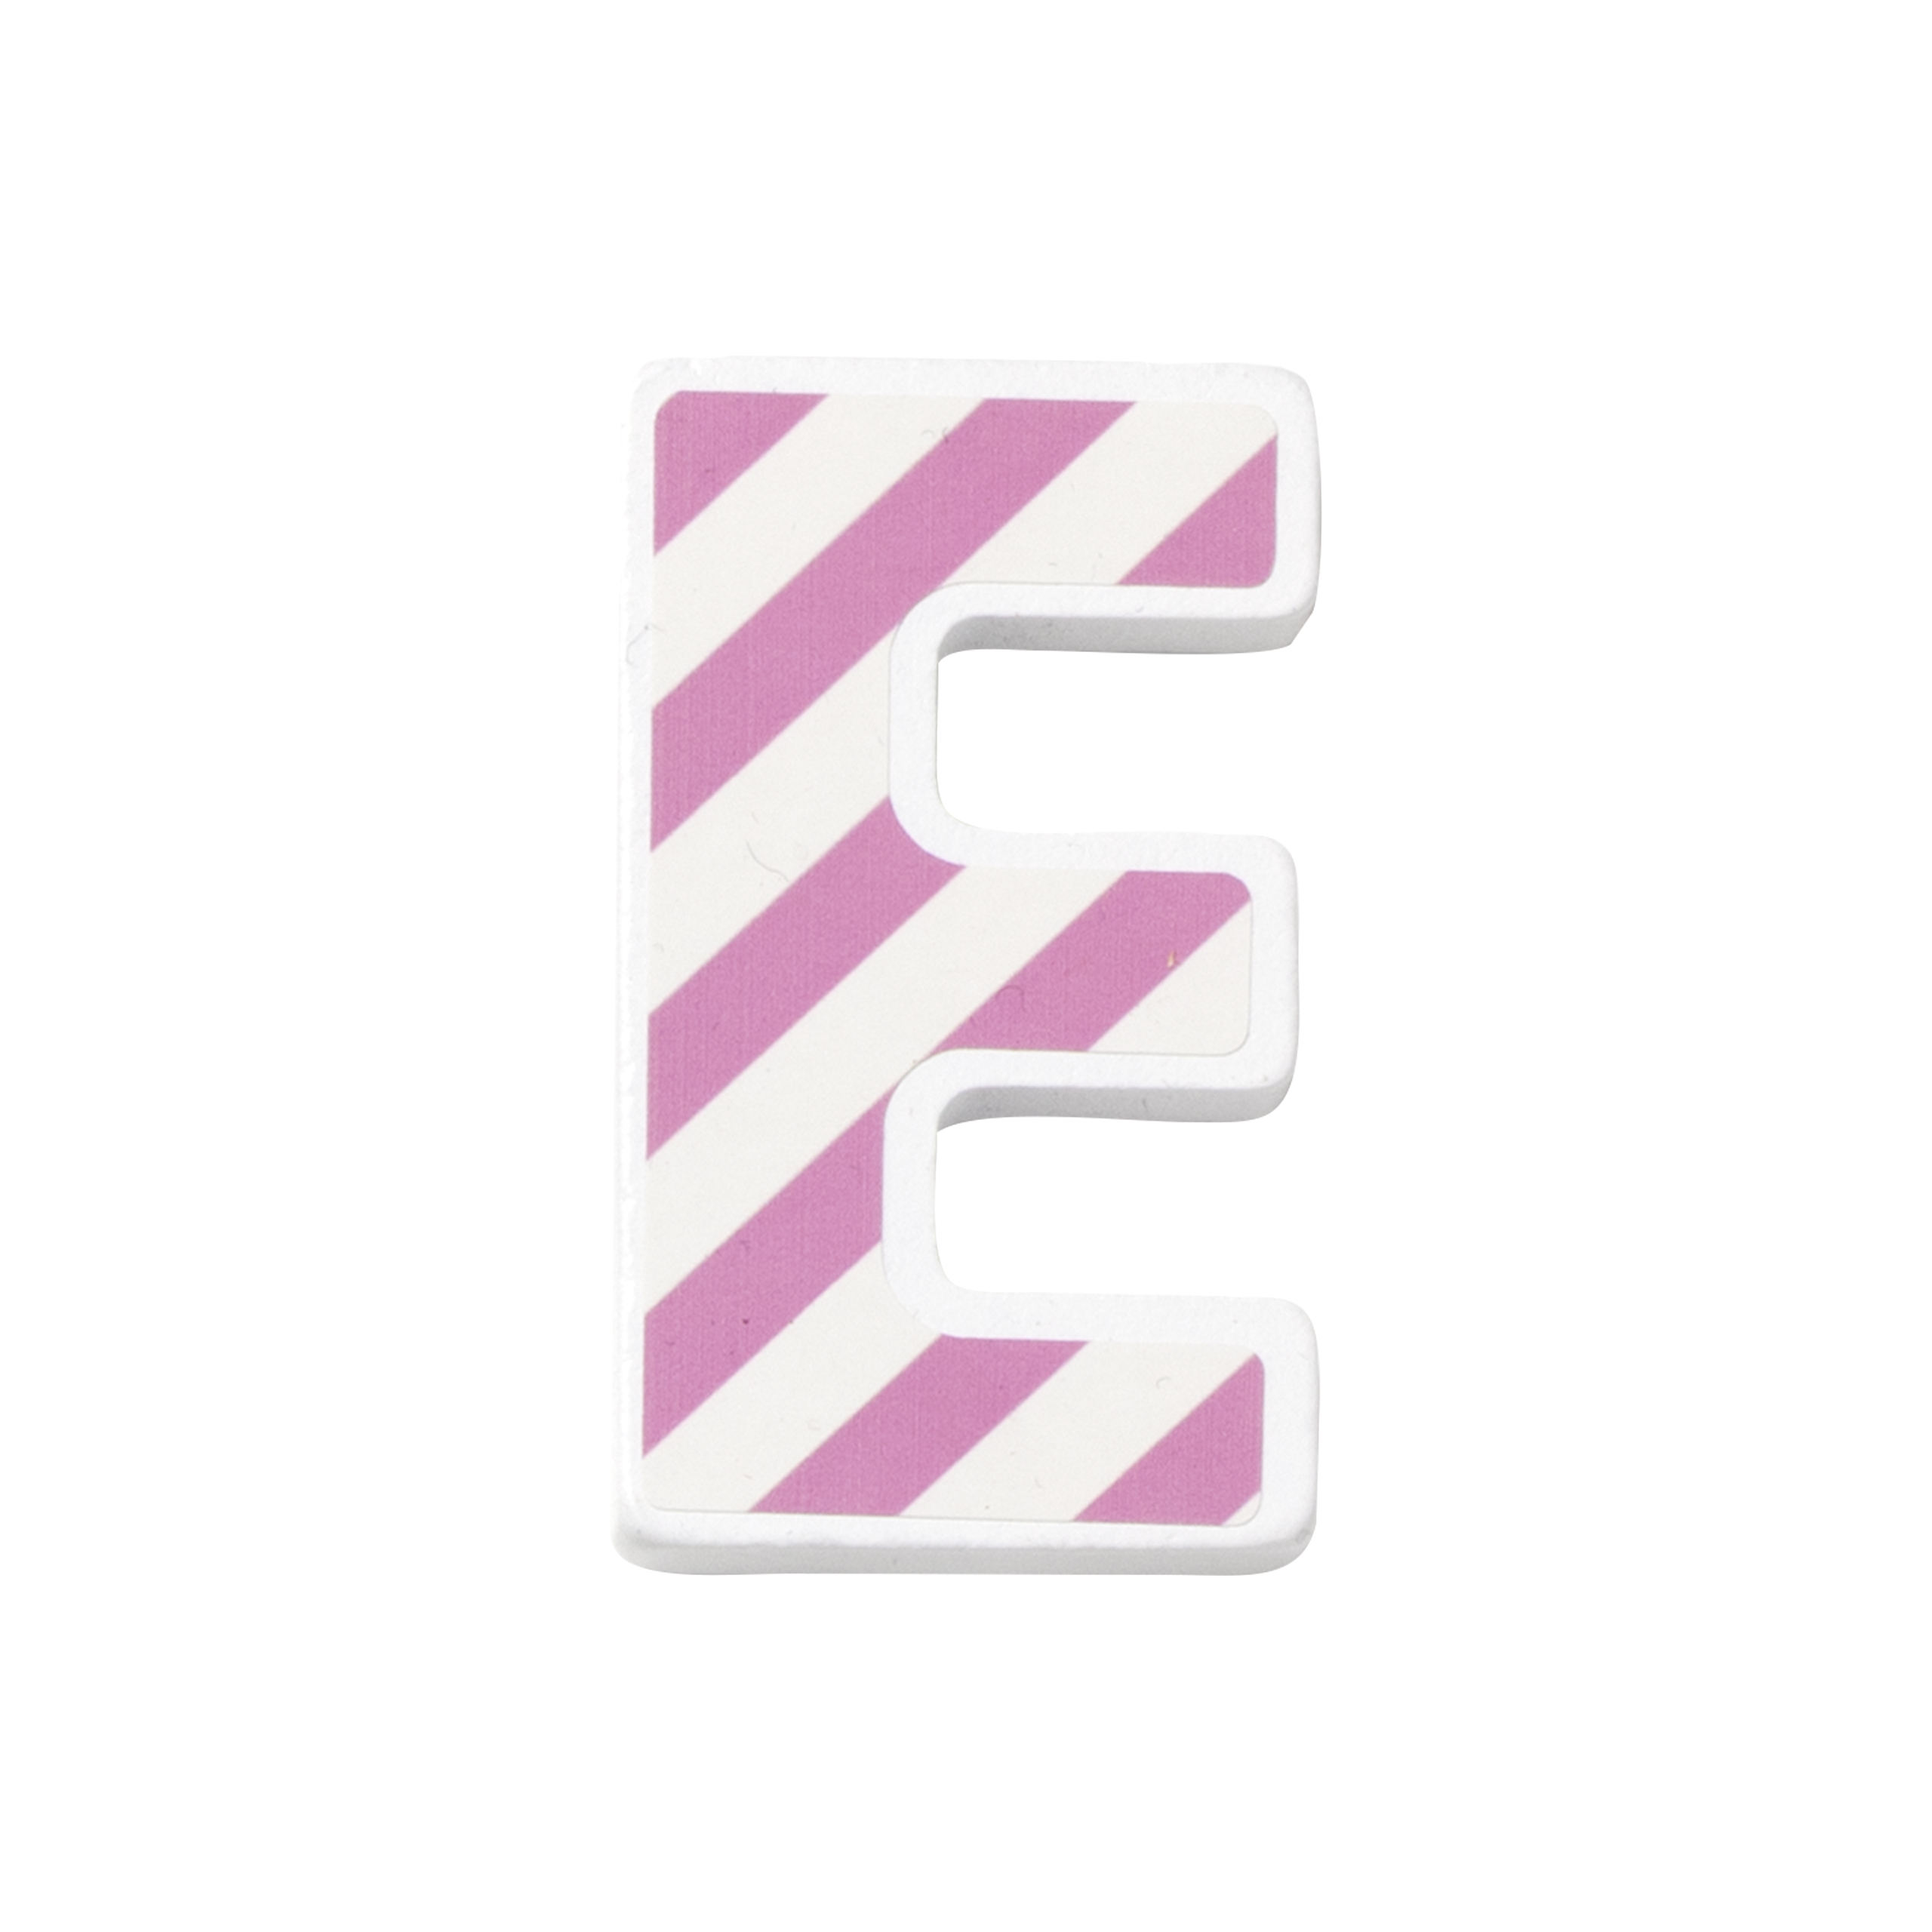 Micki micki e - decorative letter & mix and match stickers